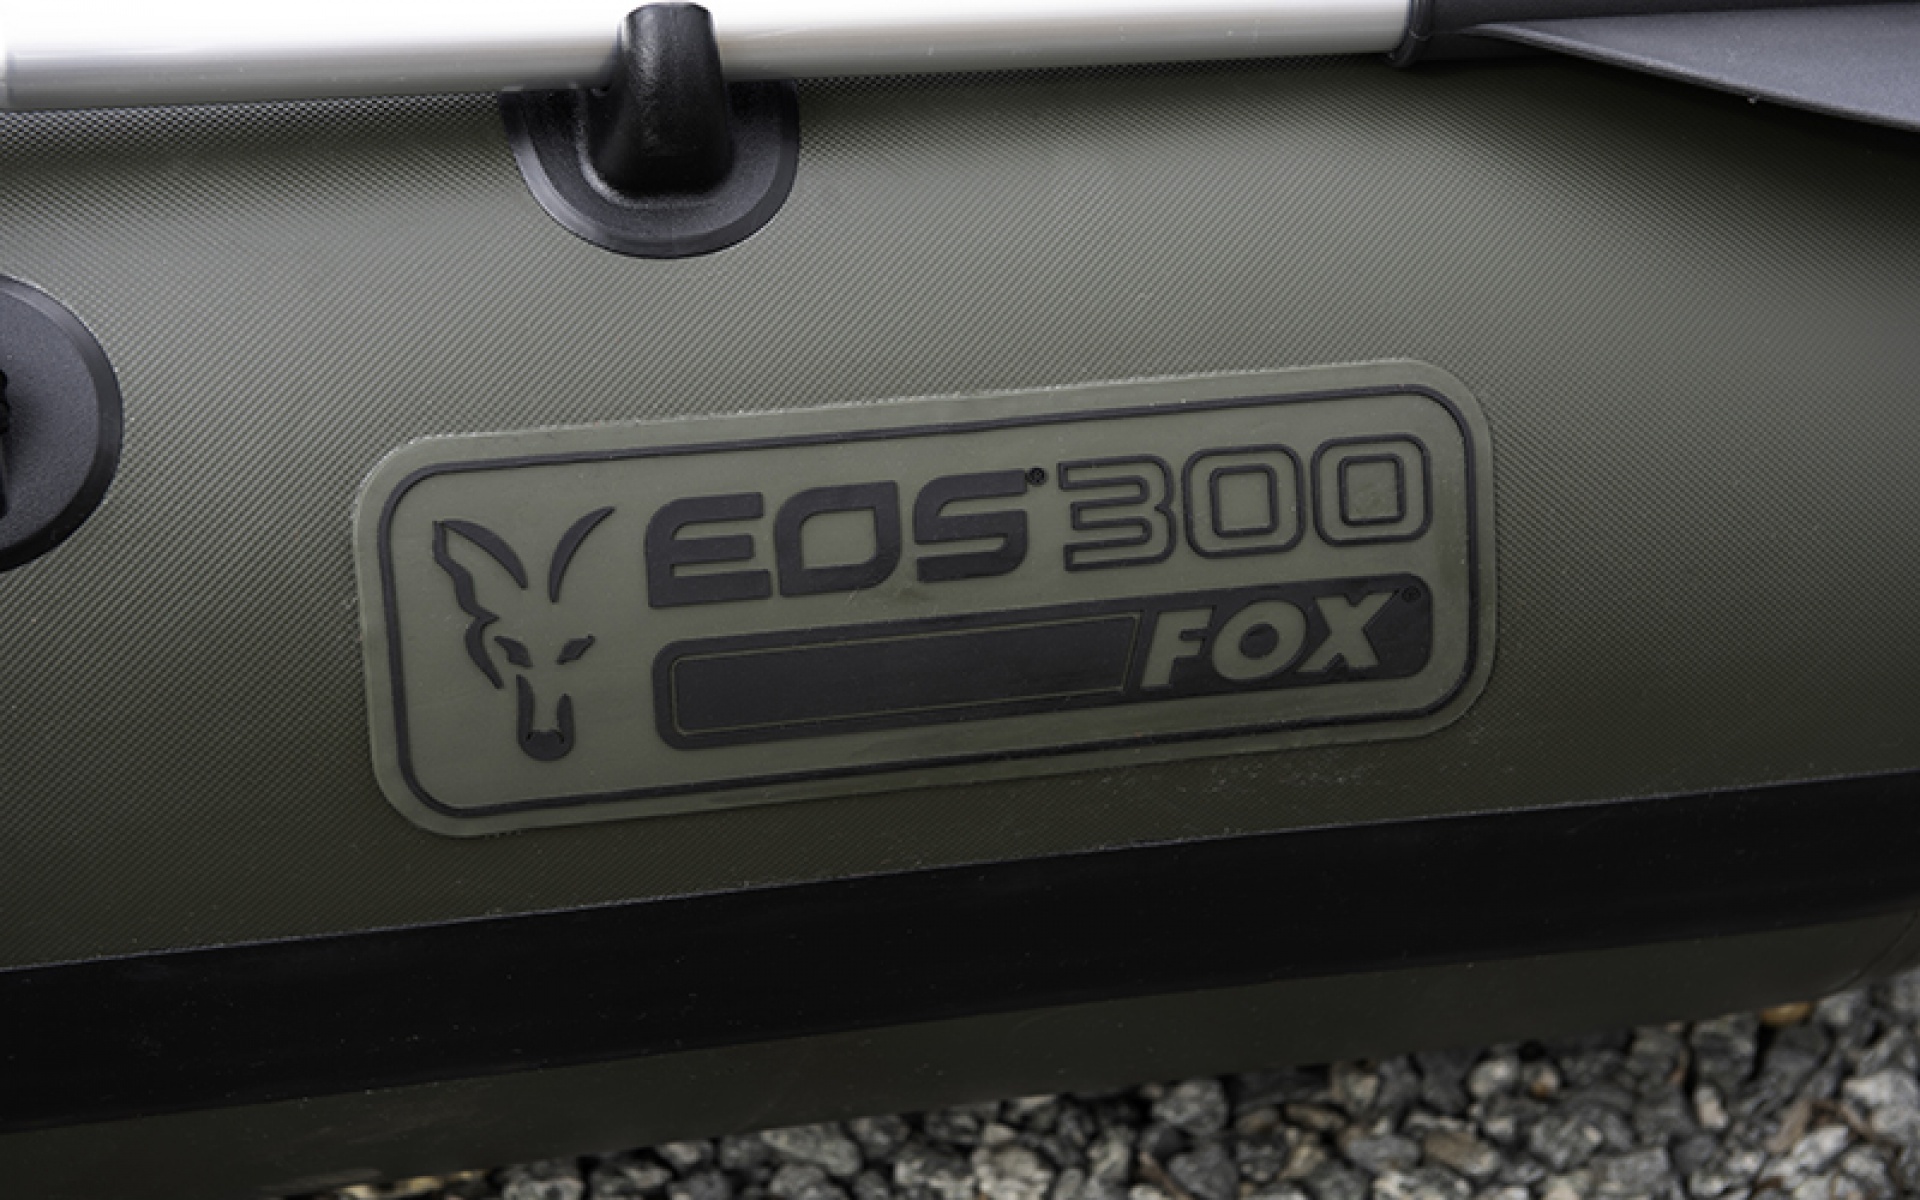 Fox EOS 300 Boat